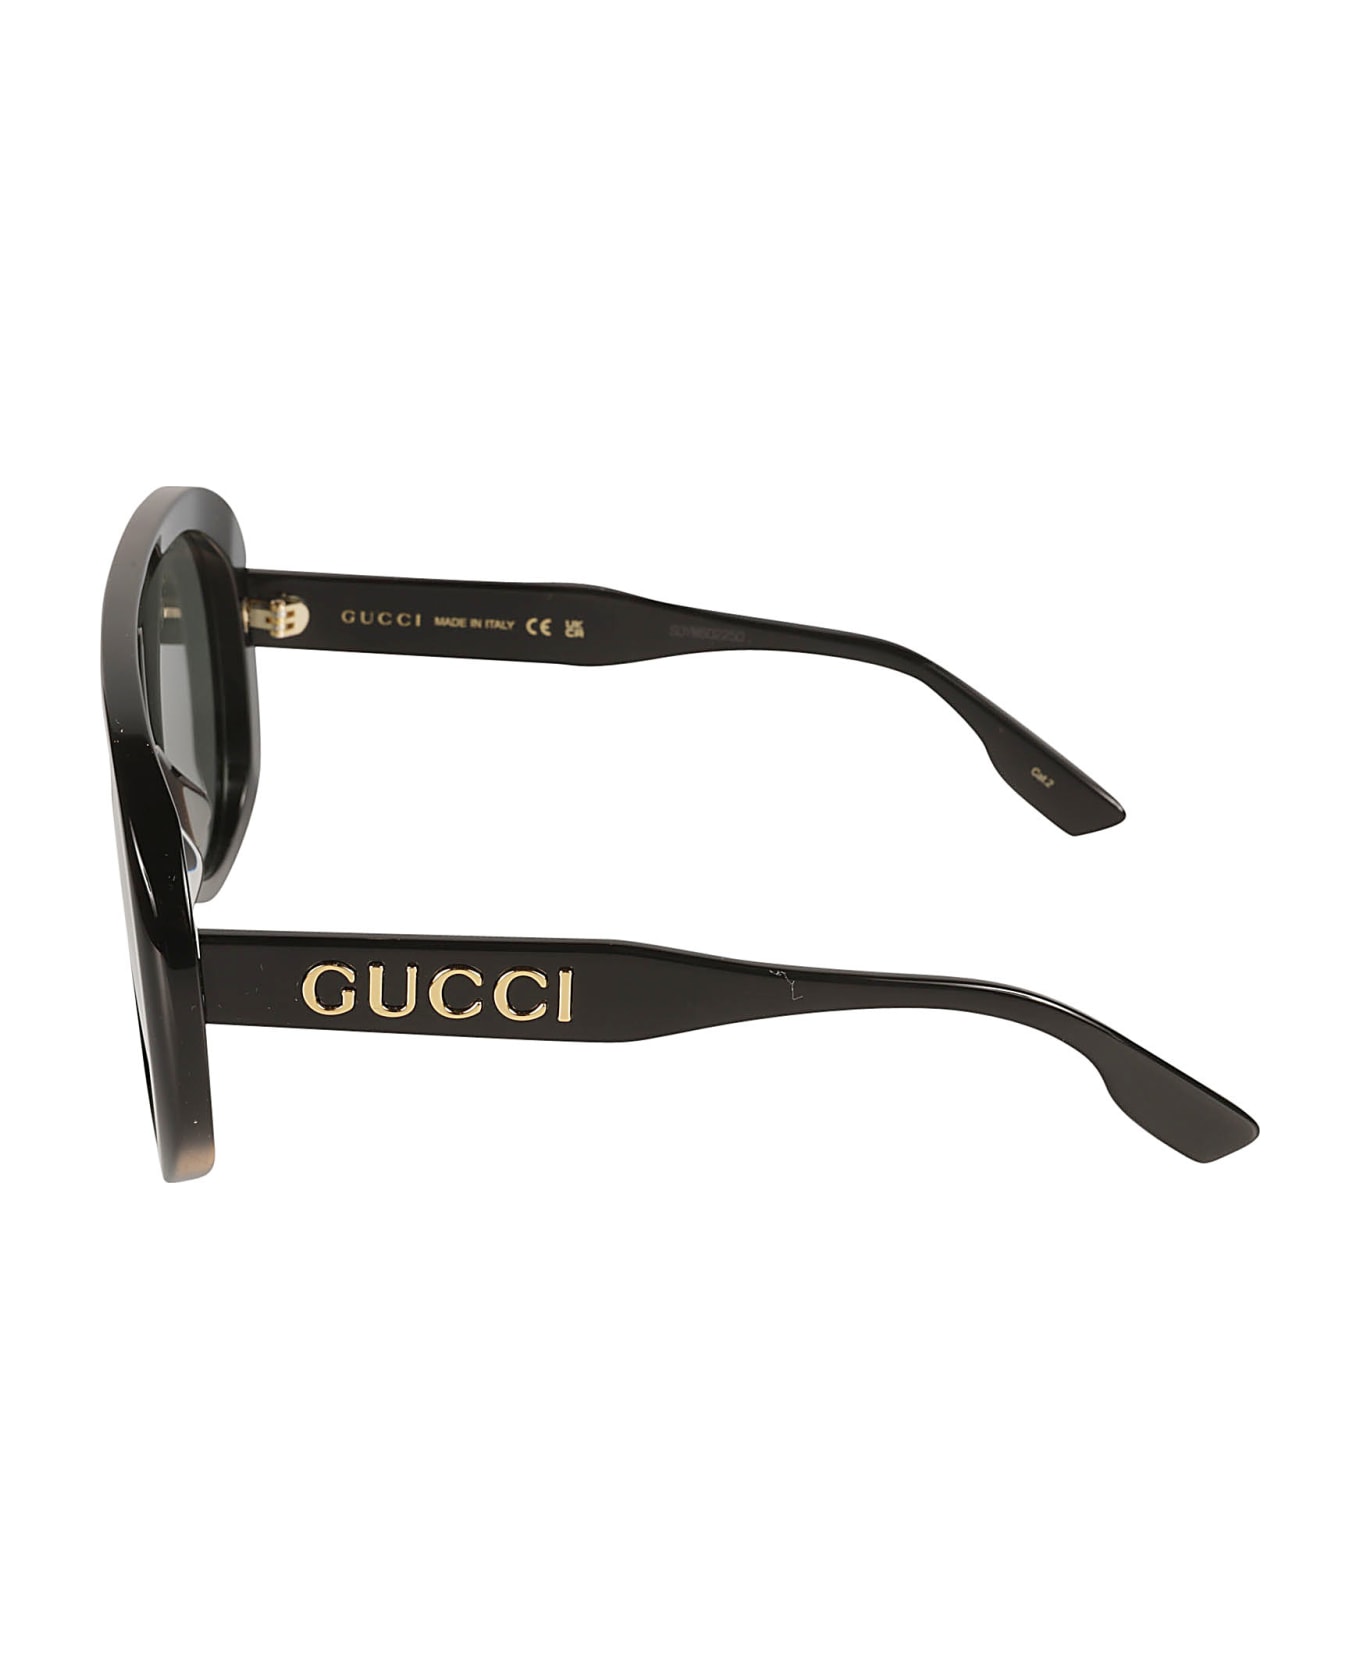 Gucci Eyewear Mask Frame Sunglasses - Black/Grey